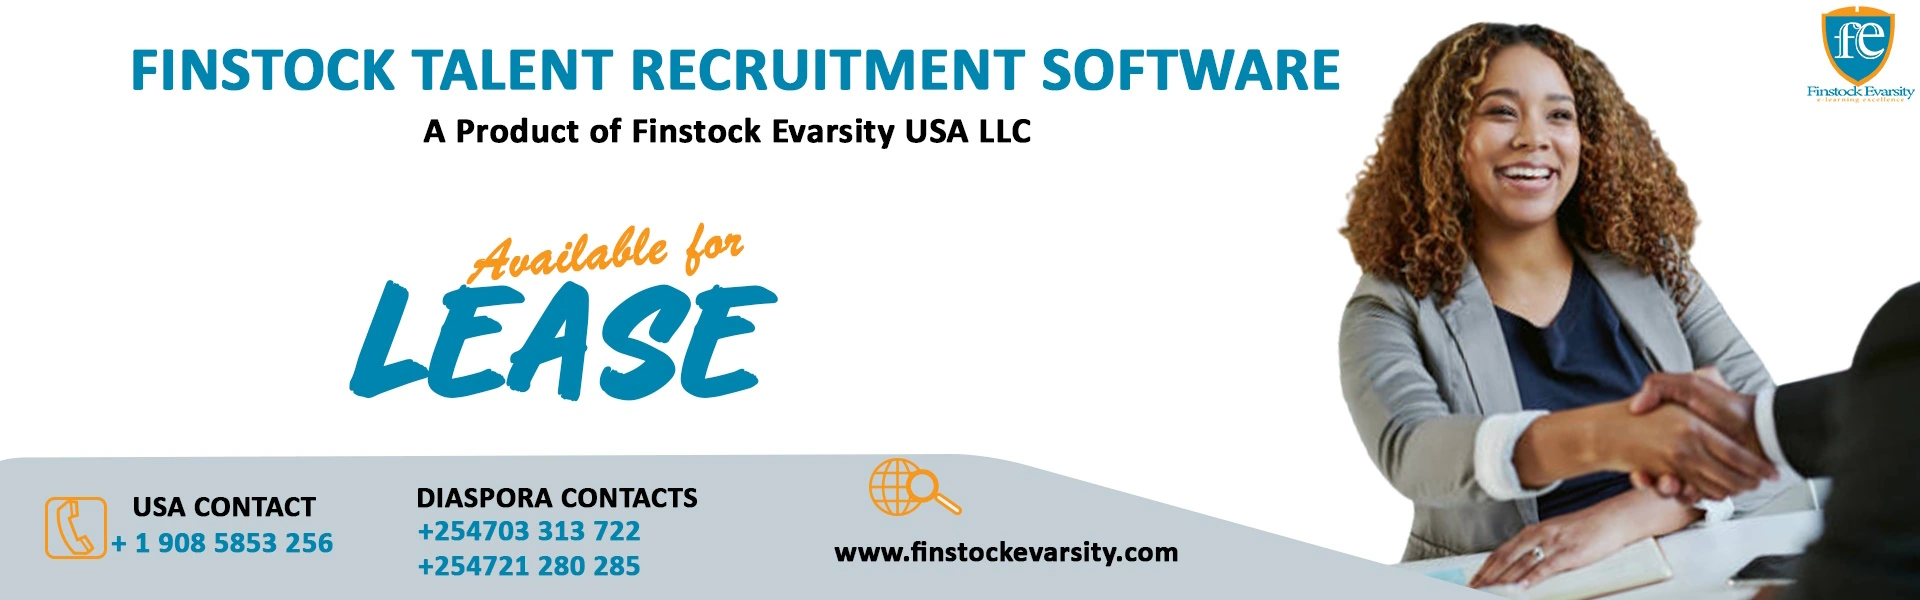 Finstock Evarsity Talent Recruitment Software